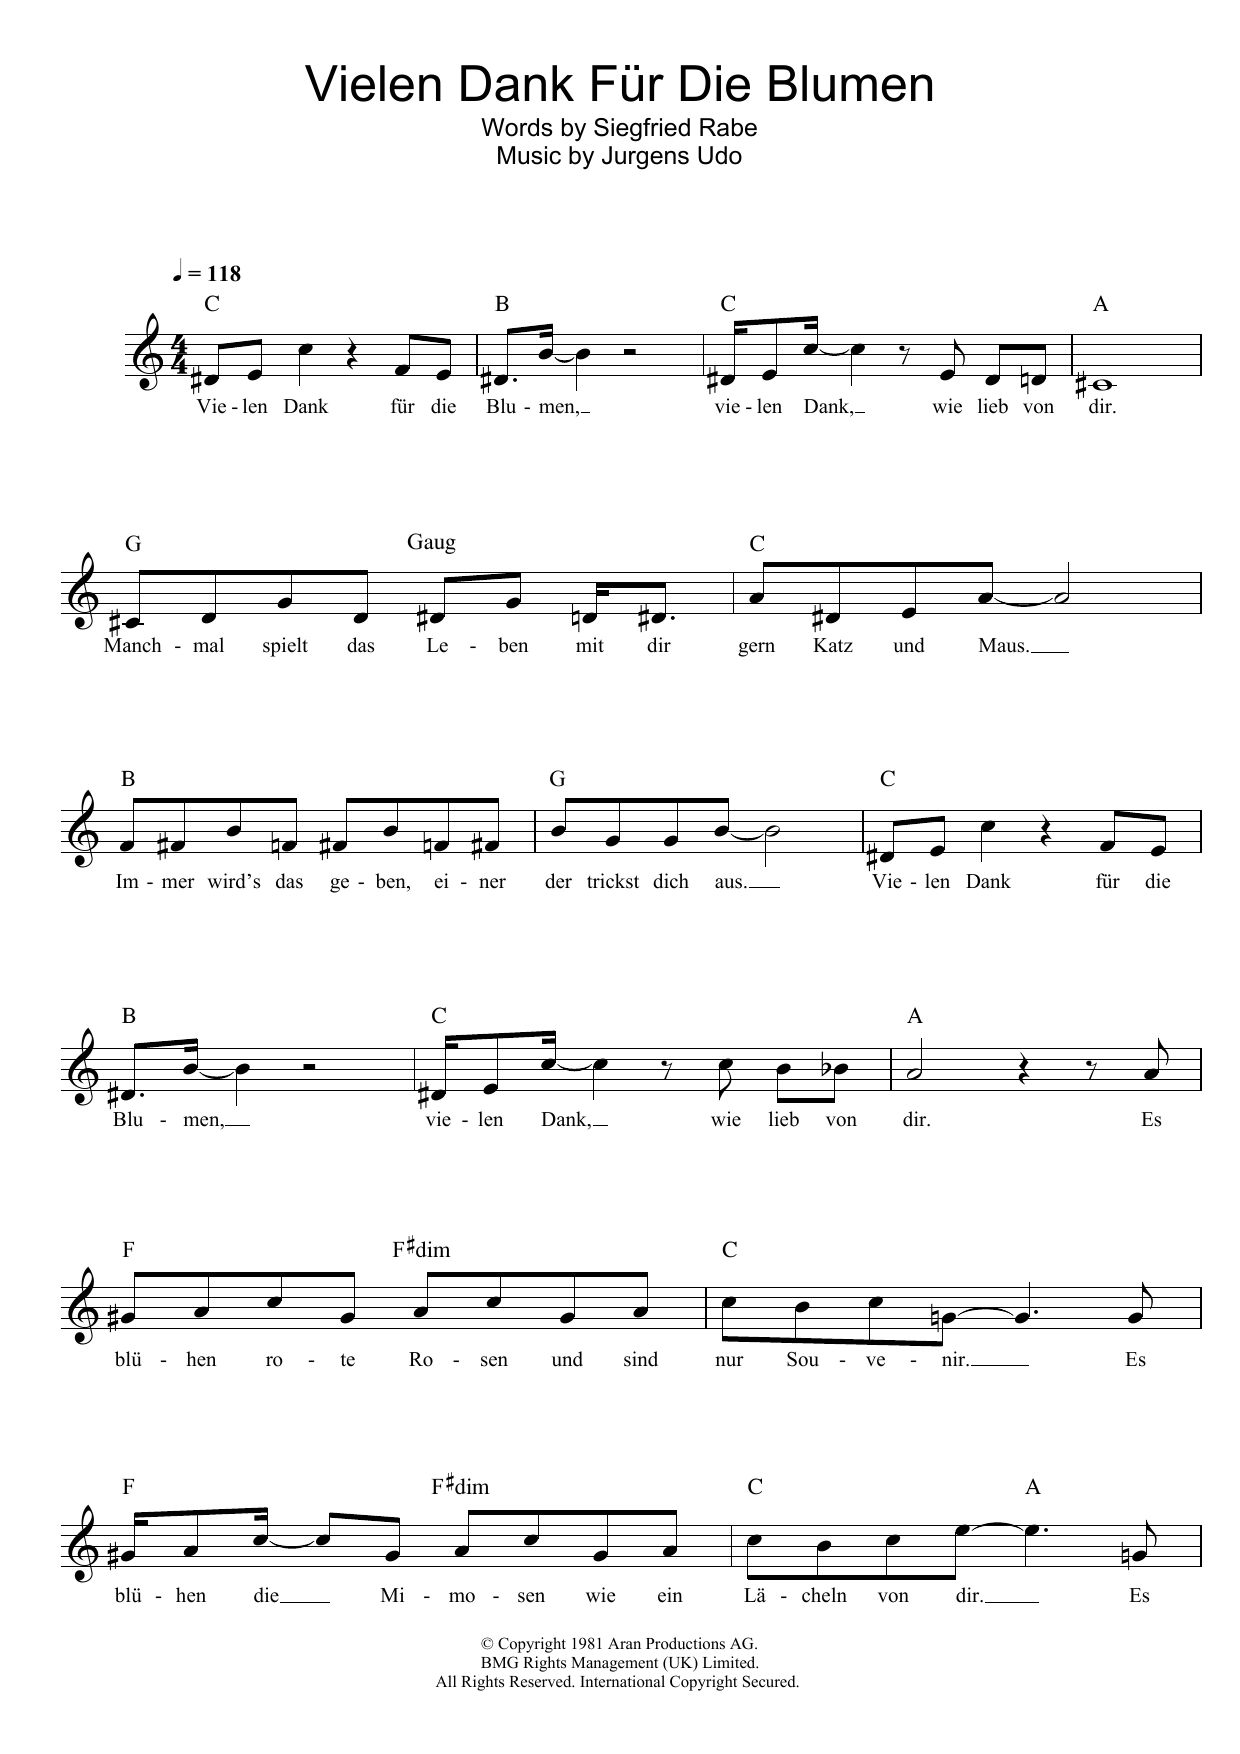 Udo Jurgens Vielen Dank Fur Die Blumen Sheet Music Notes & Chords for Piano, Vocal & Guitar (Right-Hand Melody) - Download or Print PDF